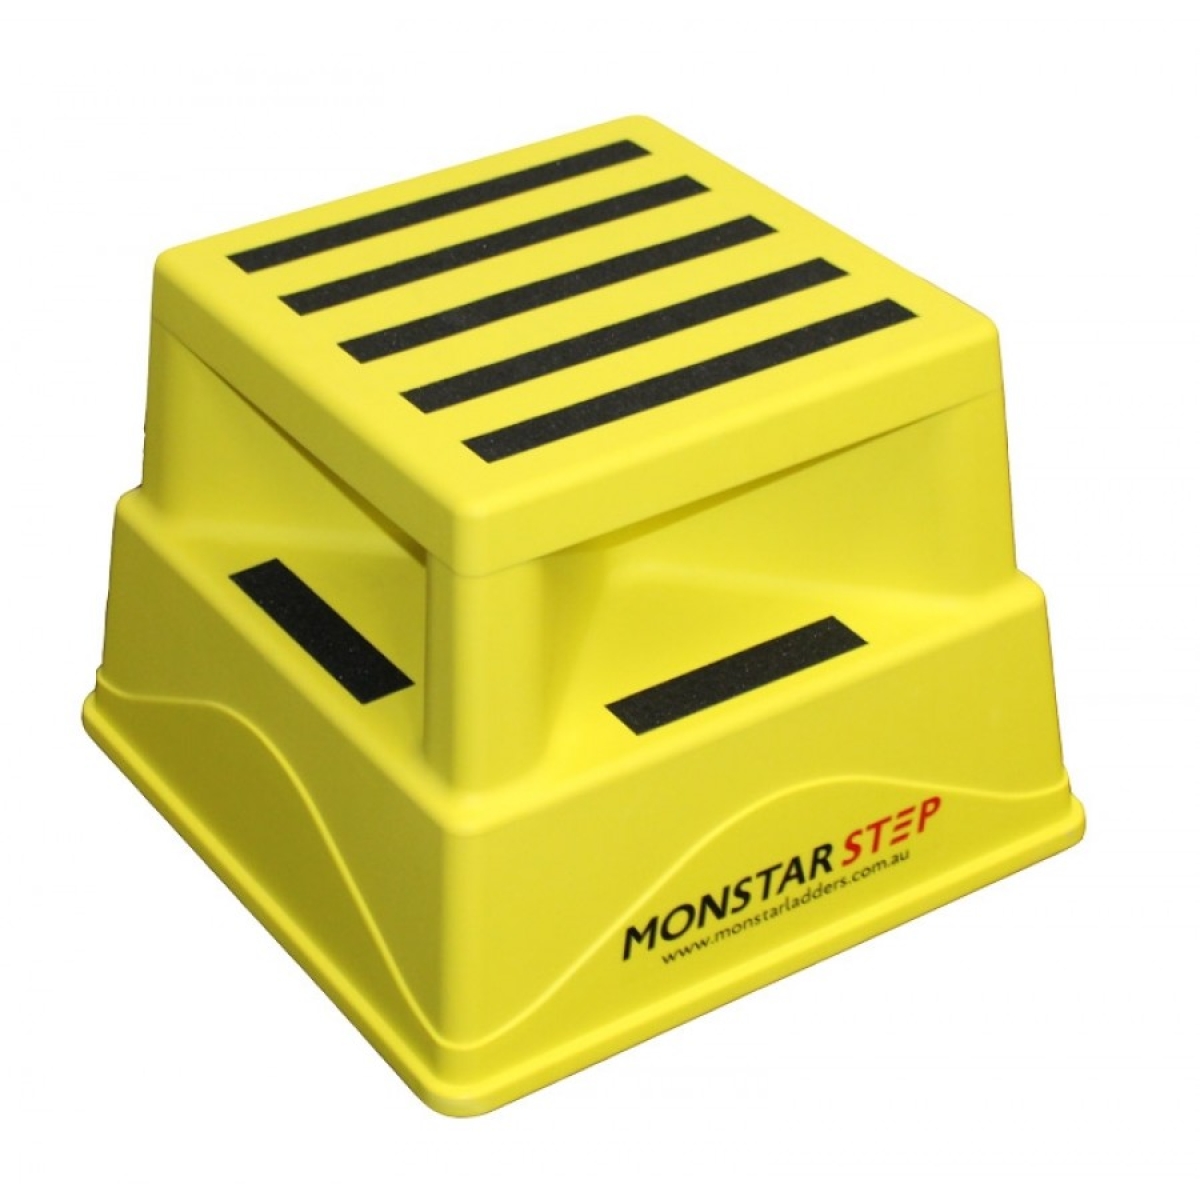 Monstar Step Safety Step